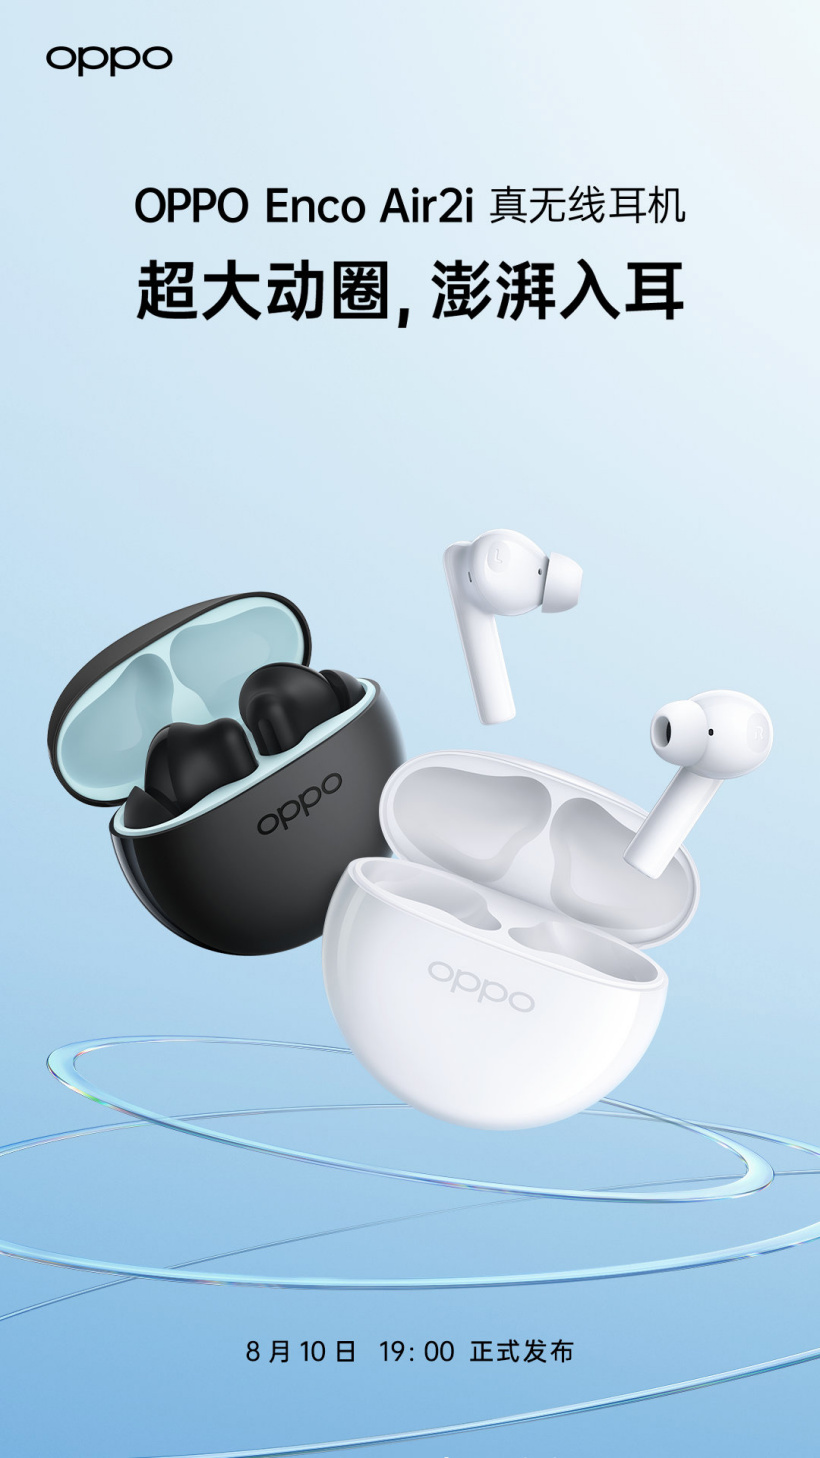 OPPO Enco Air2i 耳机确认8月10日发布 搭配充电盒续航达24小时